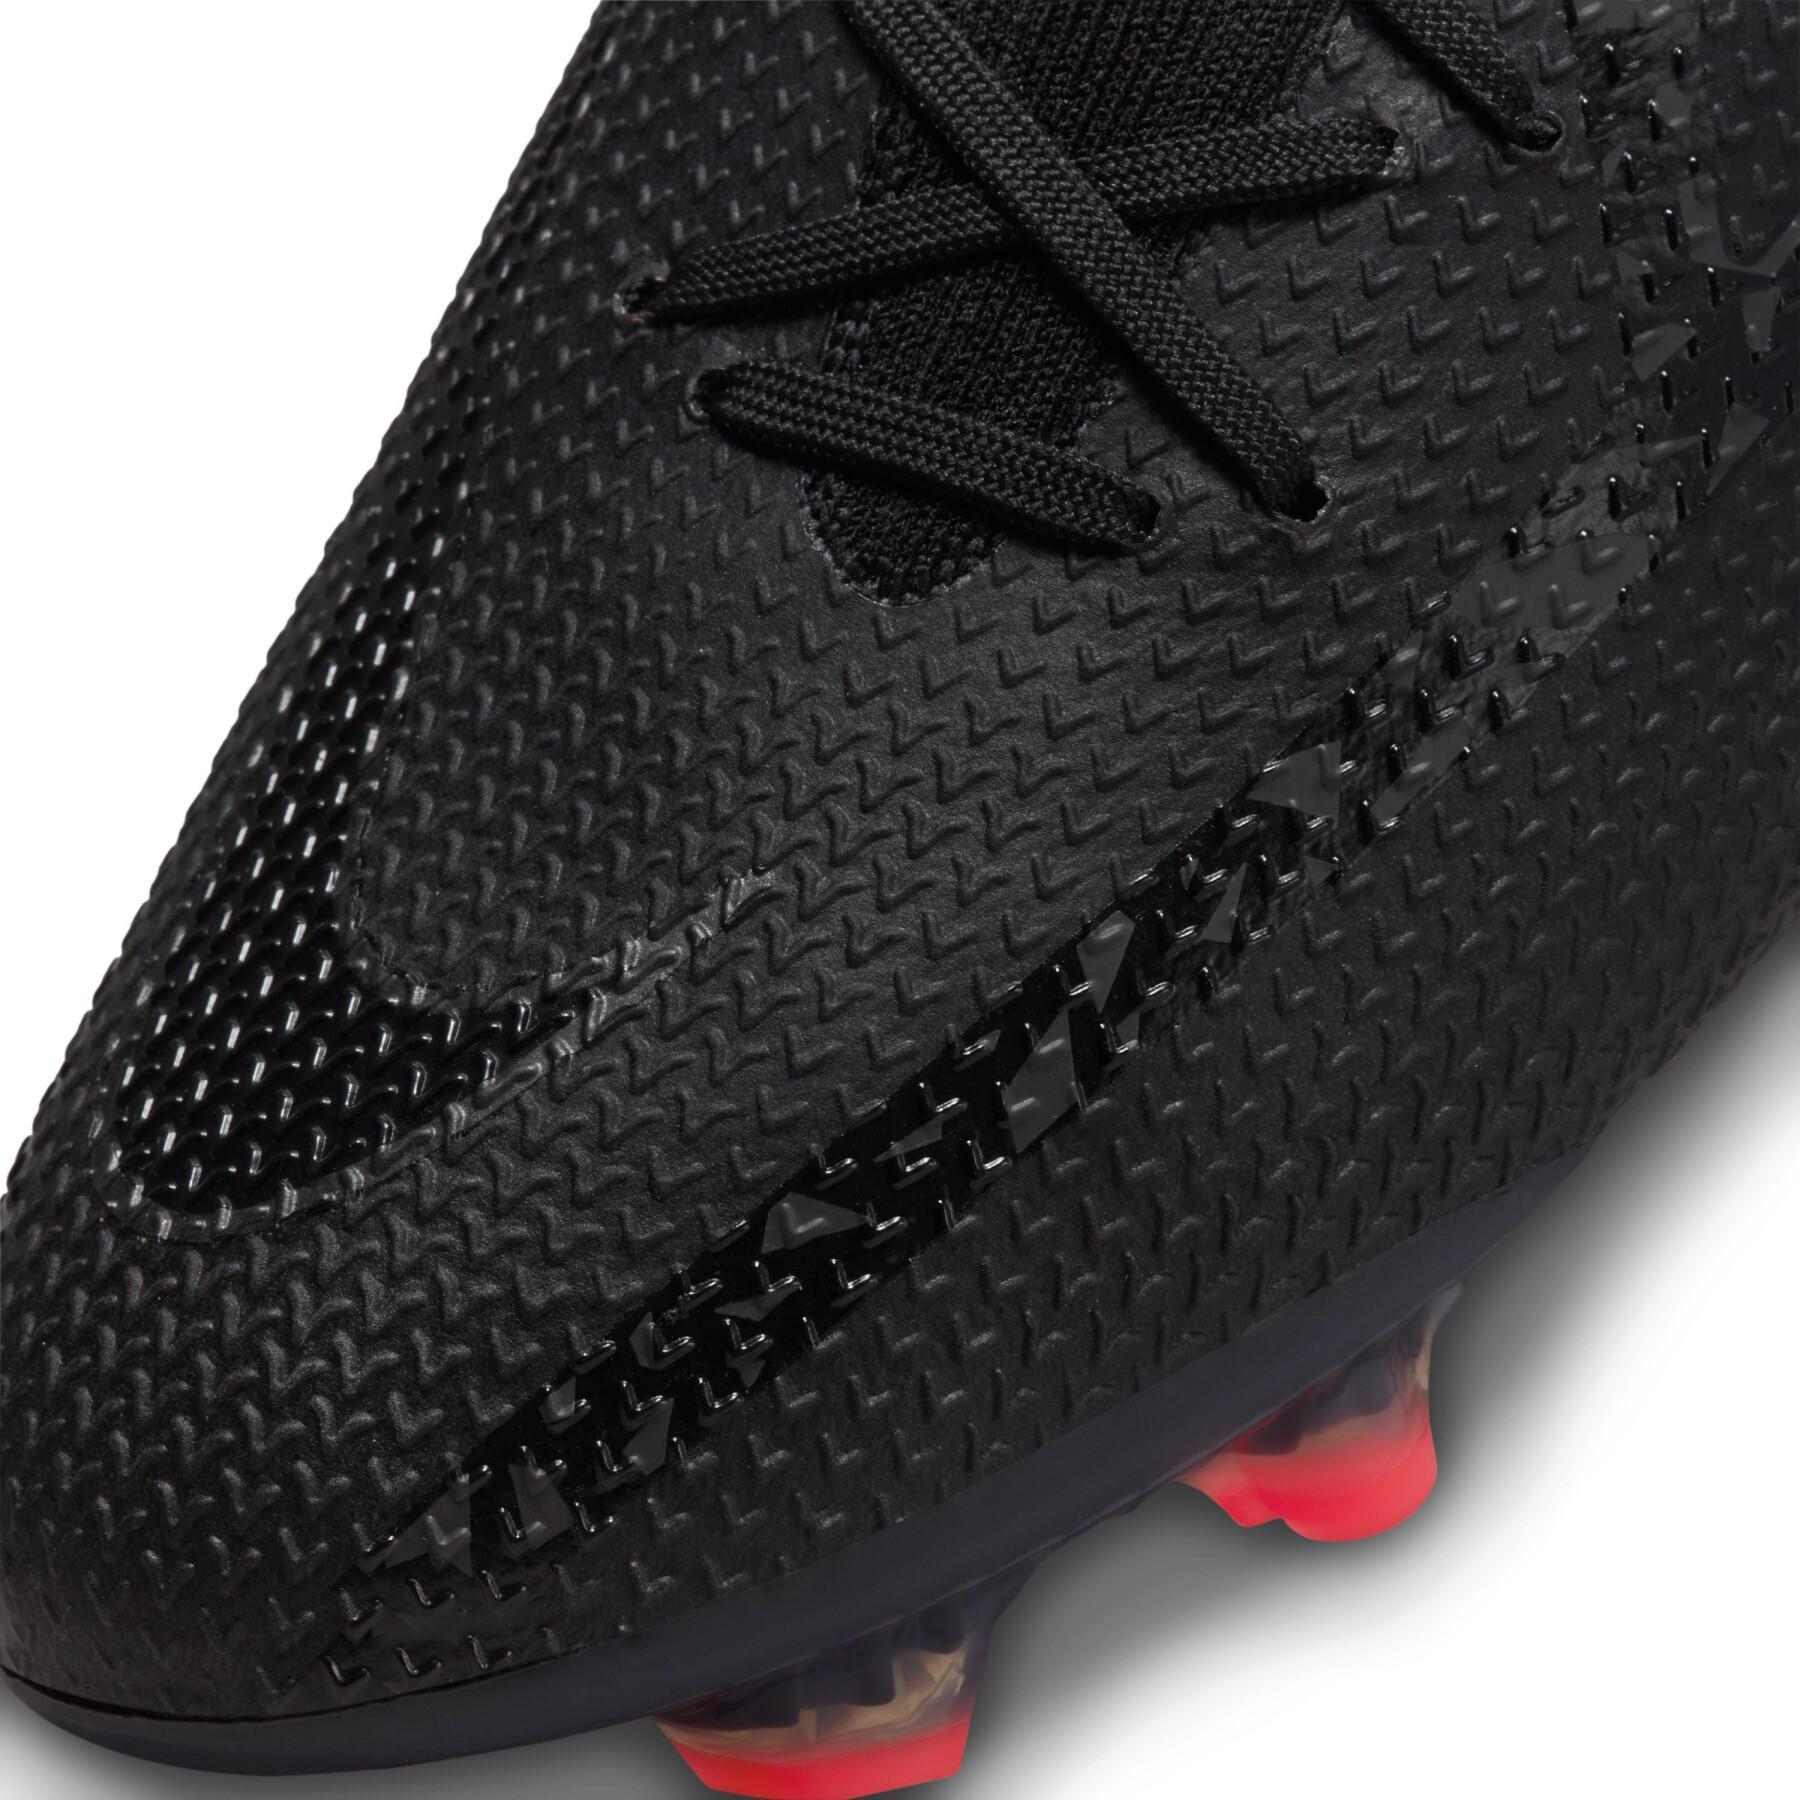 Soccer shoes Nike Phantom GT2 Dynamic Fit Elite FG - Shadow Black Pack